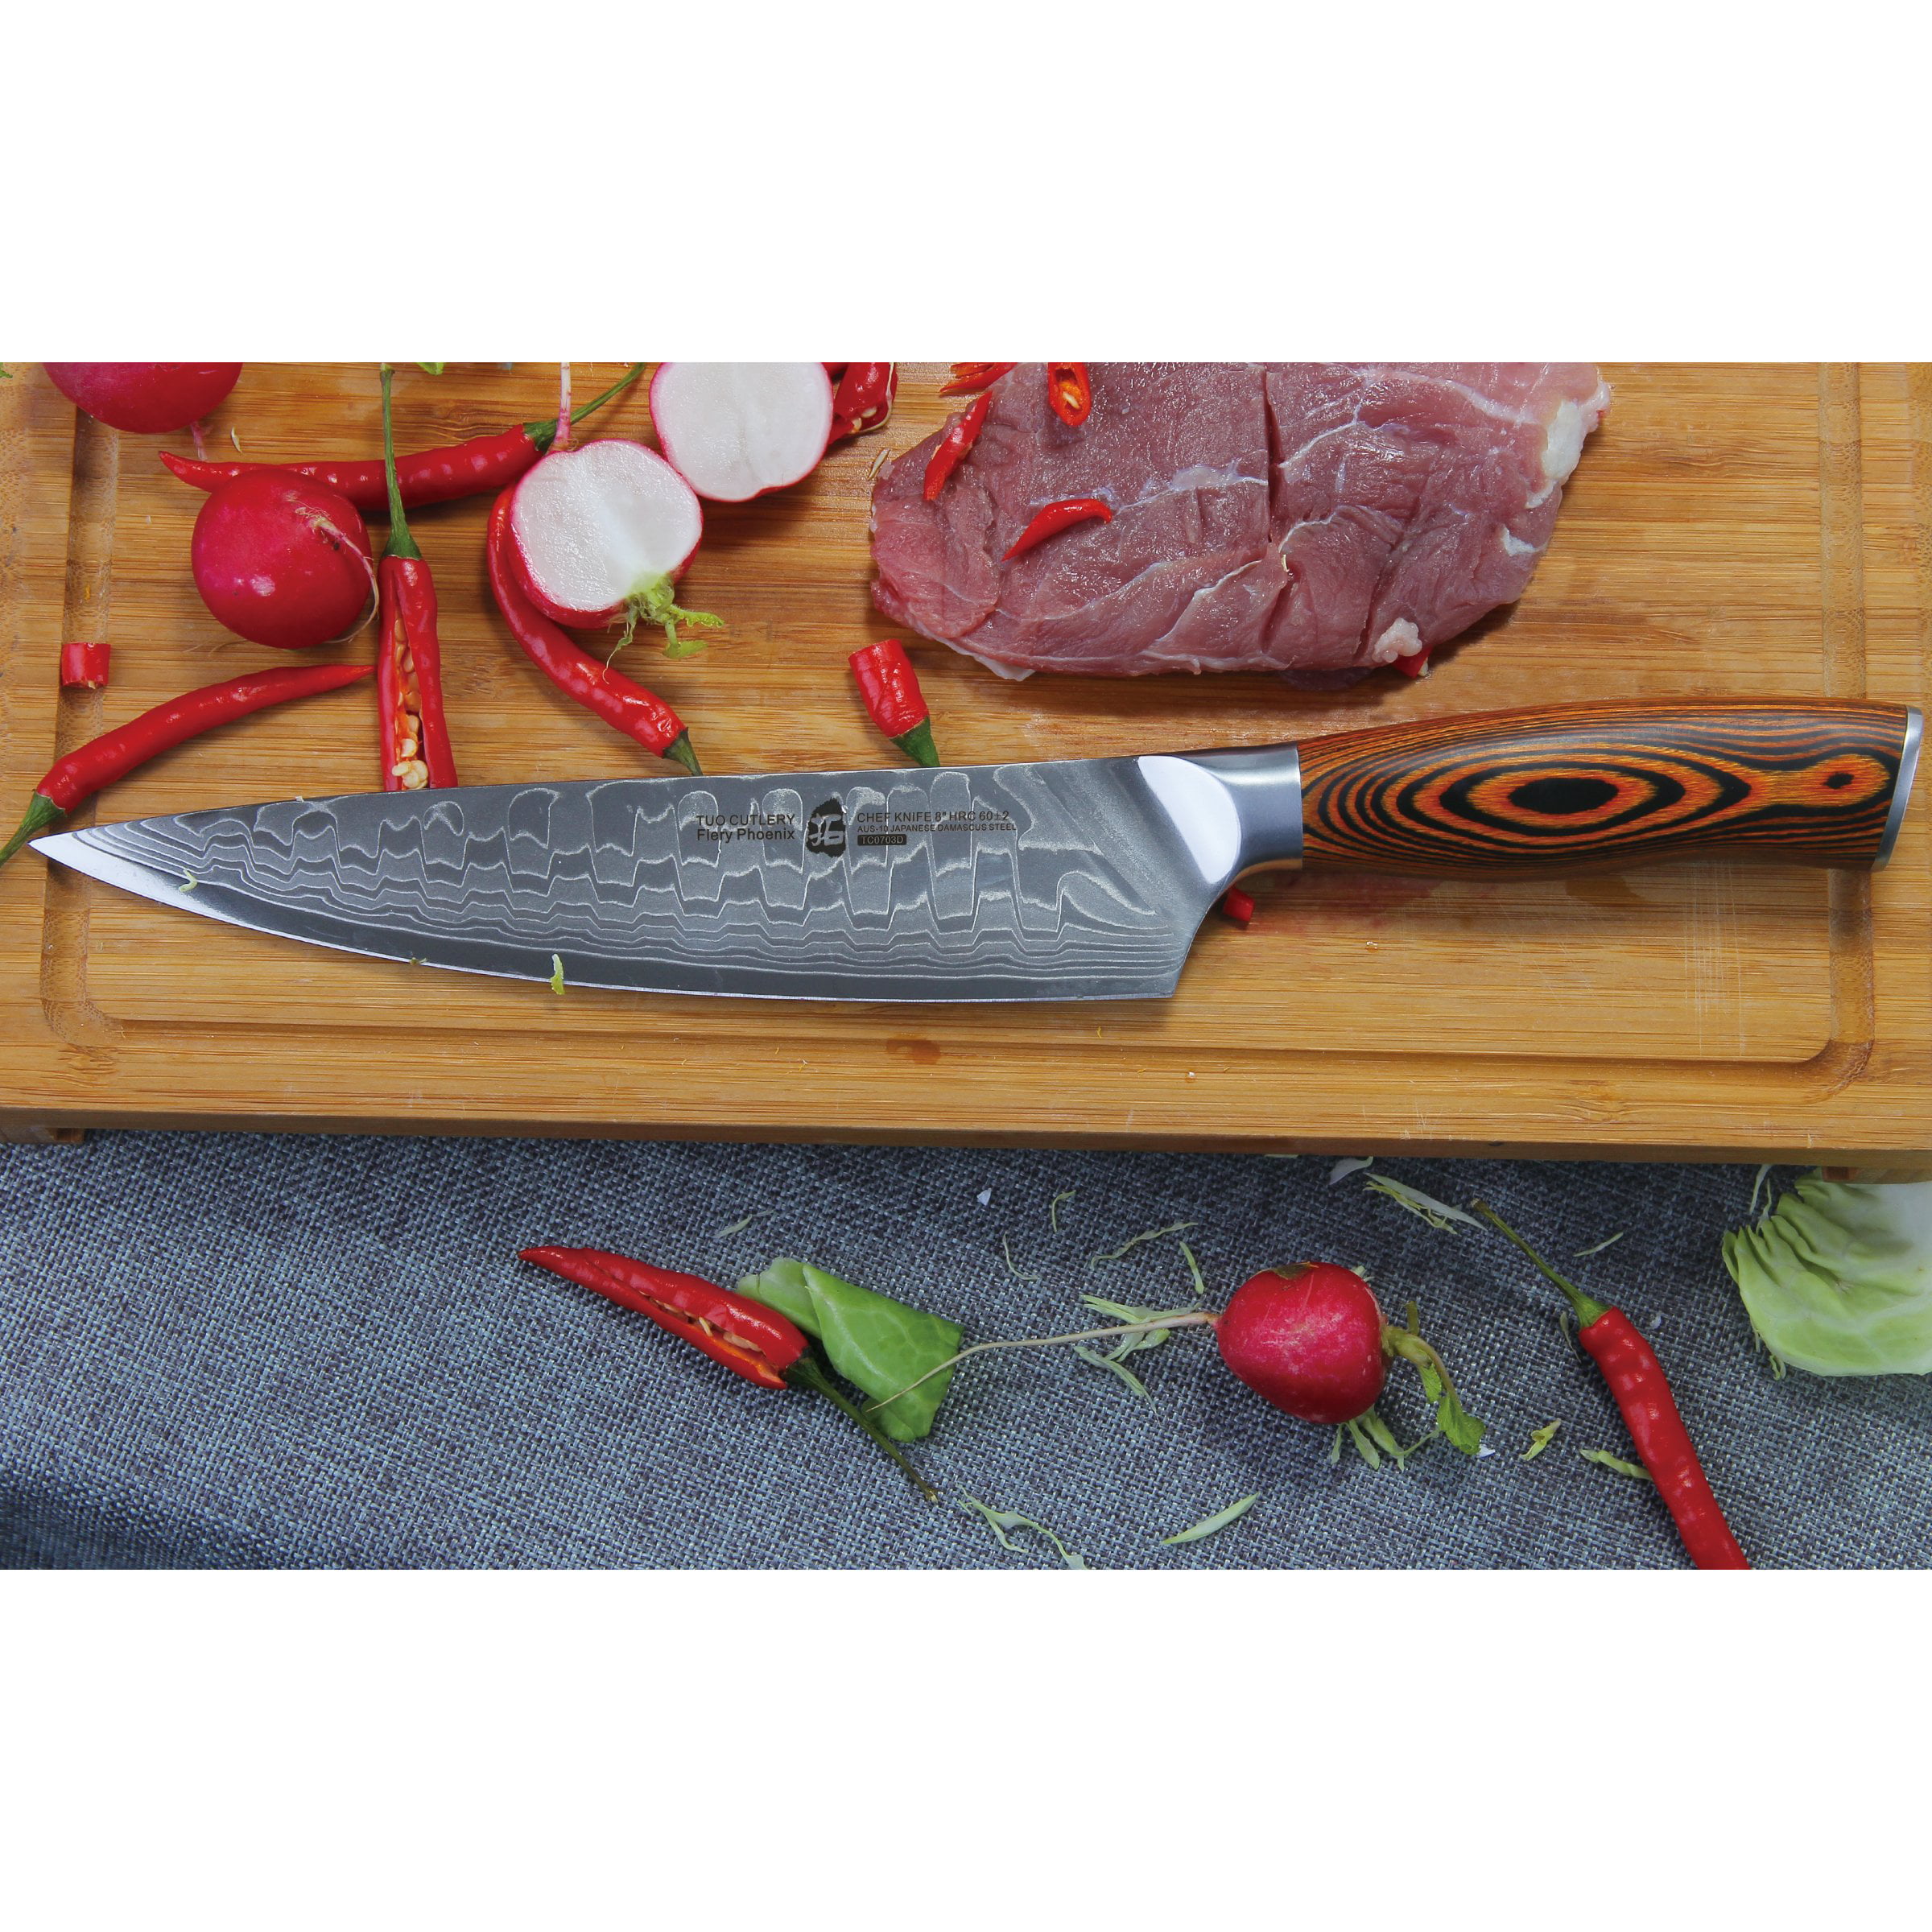 hajegato Damascus Chef Knife Nakiri Unique Handle Professional 7 inch Japanese Chefs Kitchen Knife VG10 67 Layers Damascus Steel Knive with Sheath